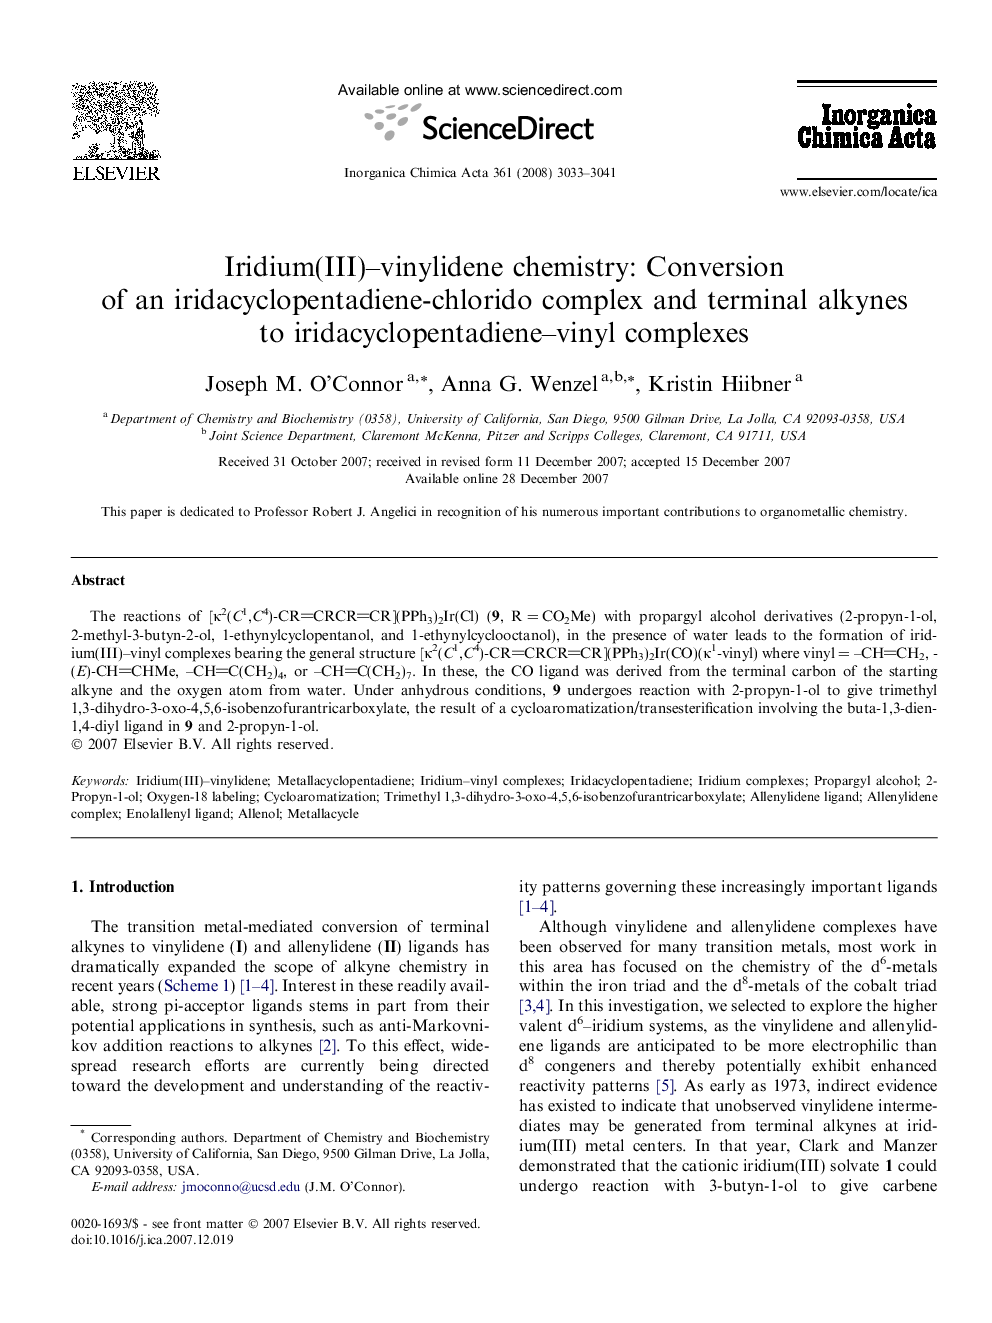 Iridium(III)-vinylidene chemistry: Conversion of an iridacyclopentadiene-chlorido complex and terminal alkynes to iridacyclopentadiene-vinyl complexes